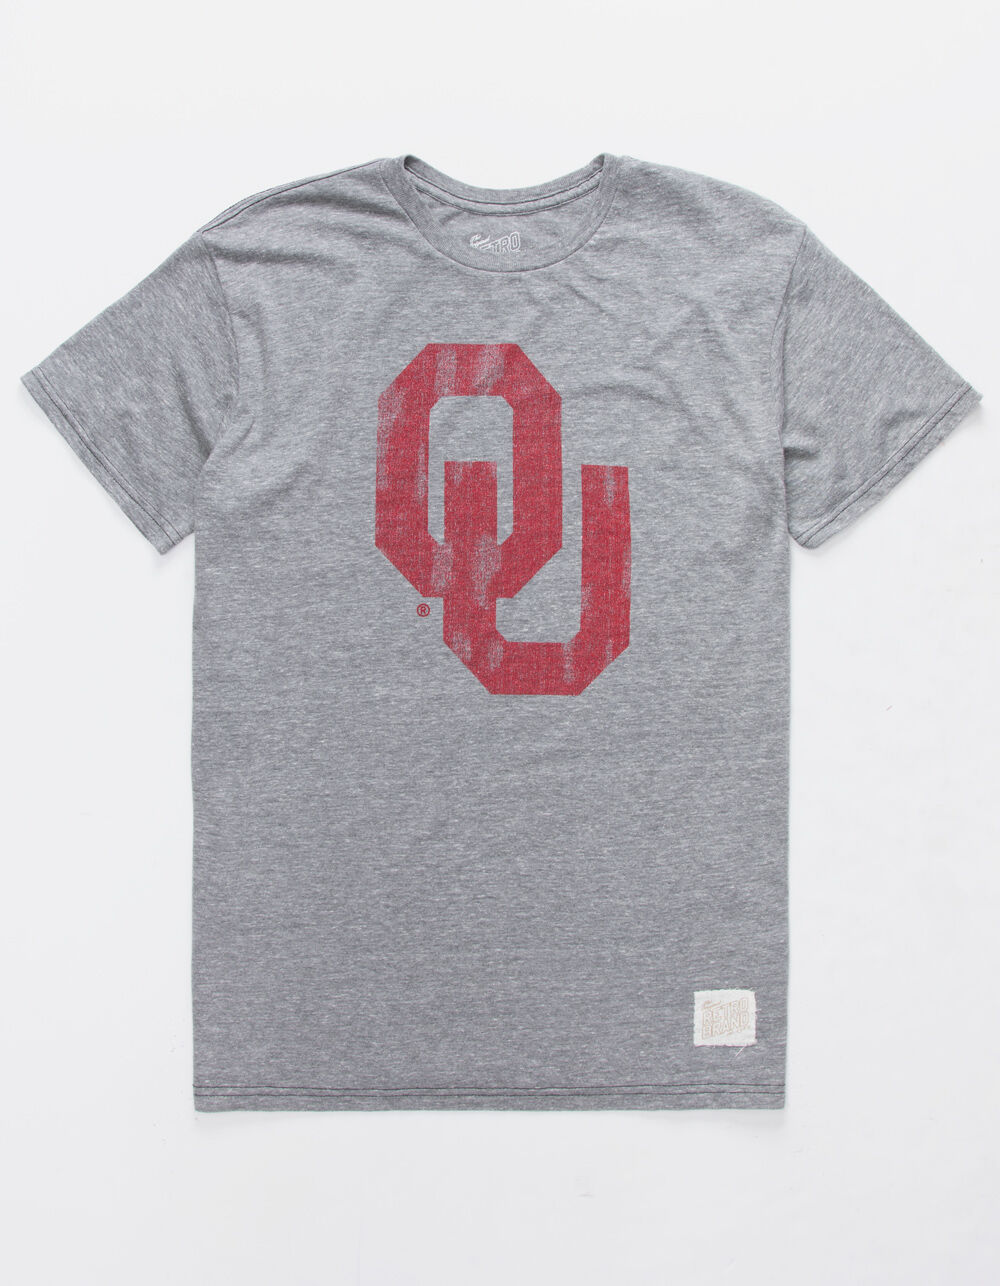 RETRO BRAND University Of Oklahoma Mens T-Shirt image number 0